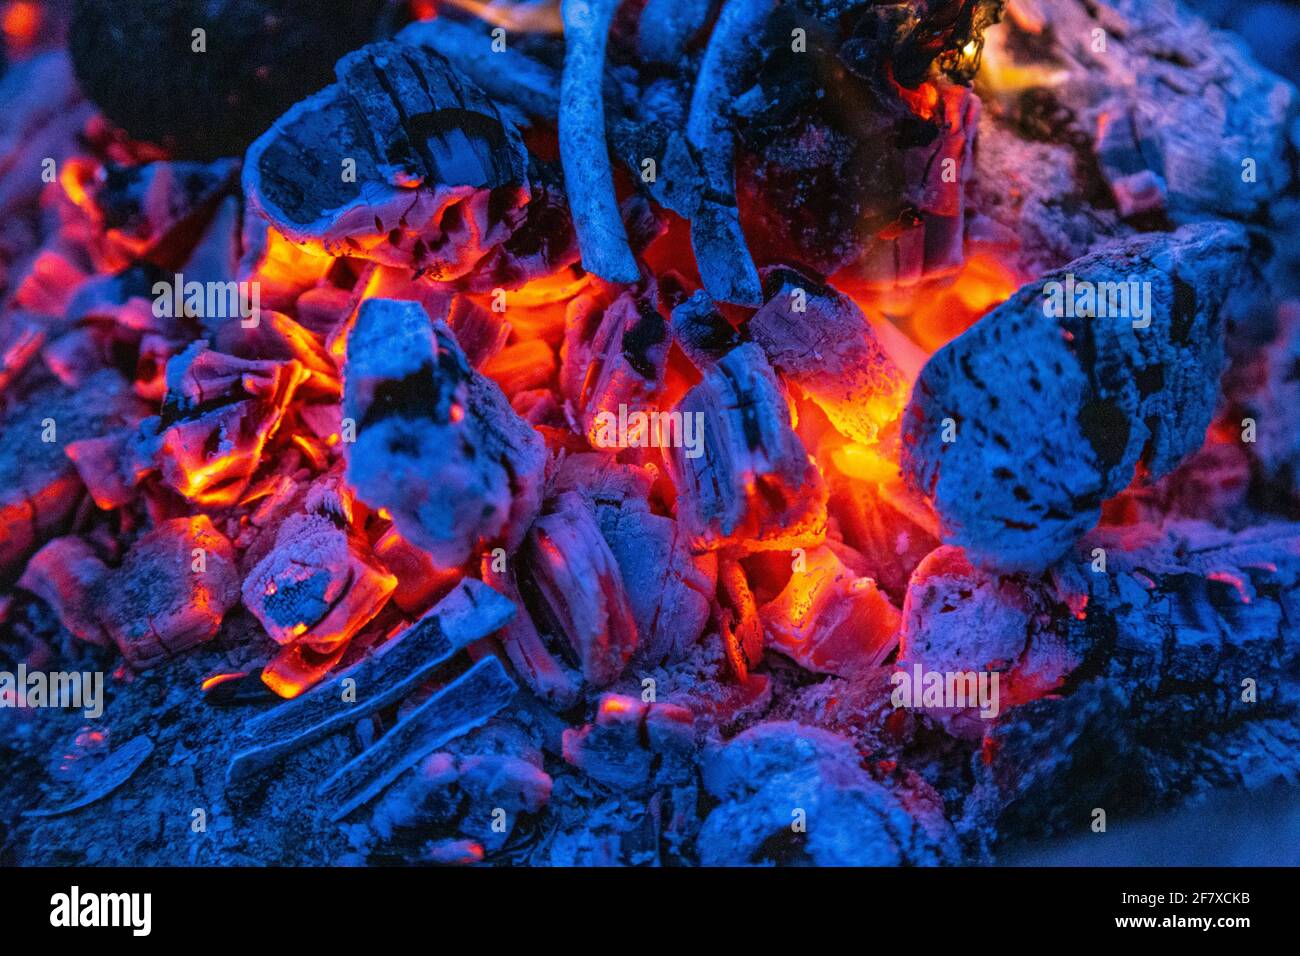 Feuer glühende Kohlen, Glut Stockfoto